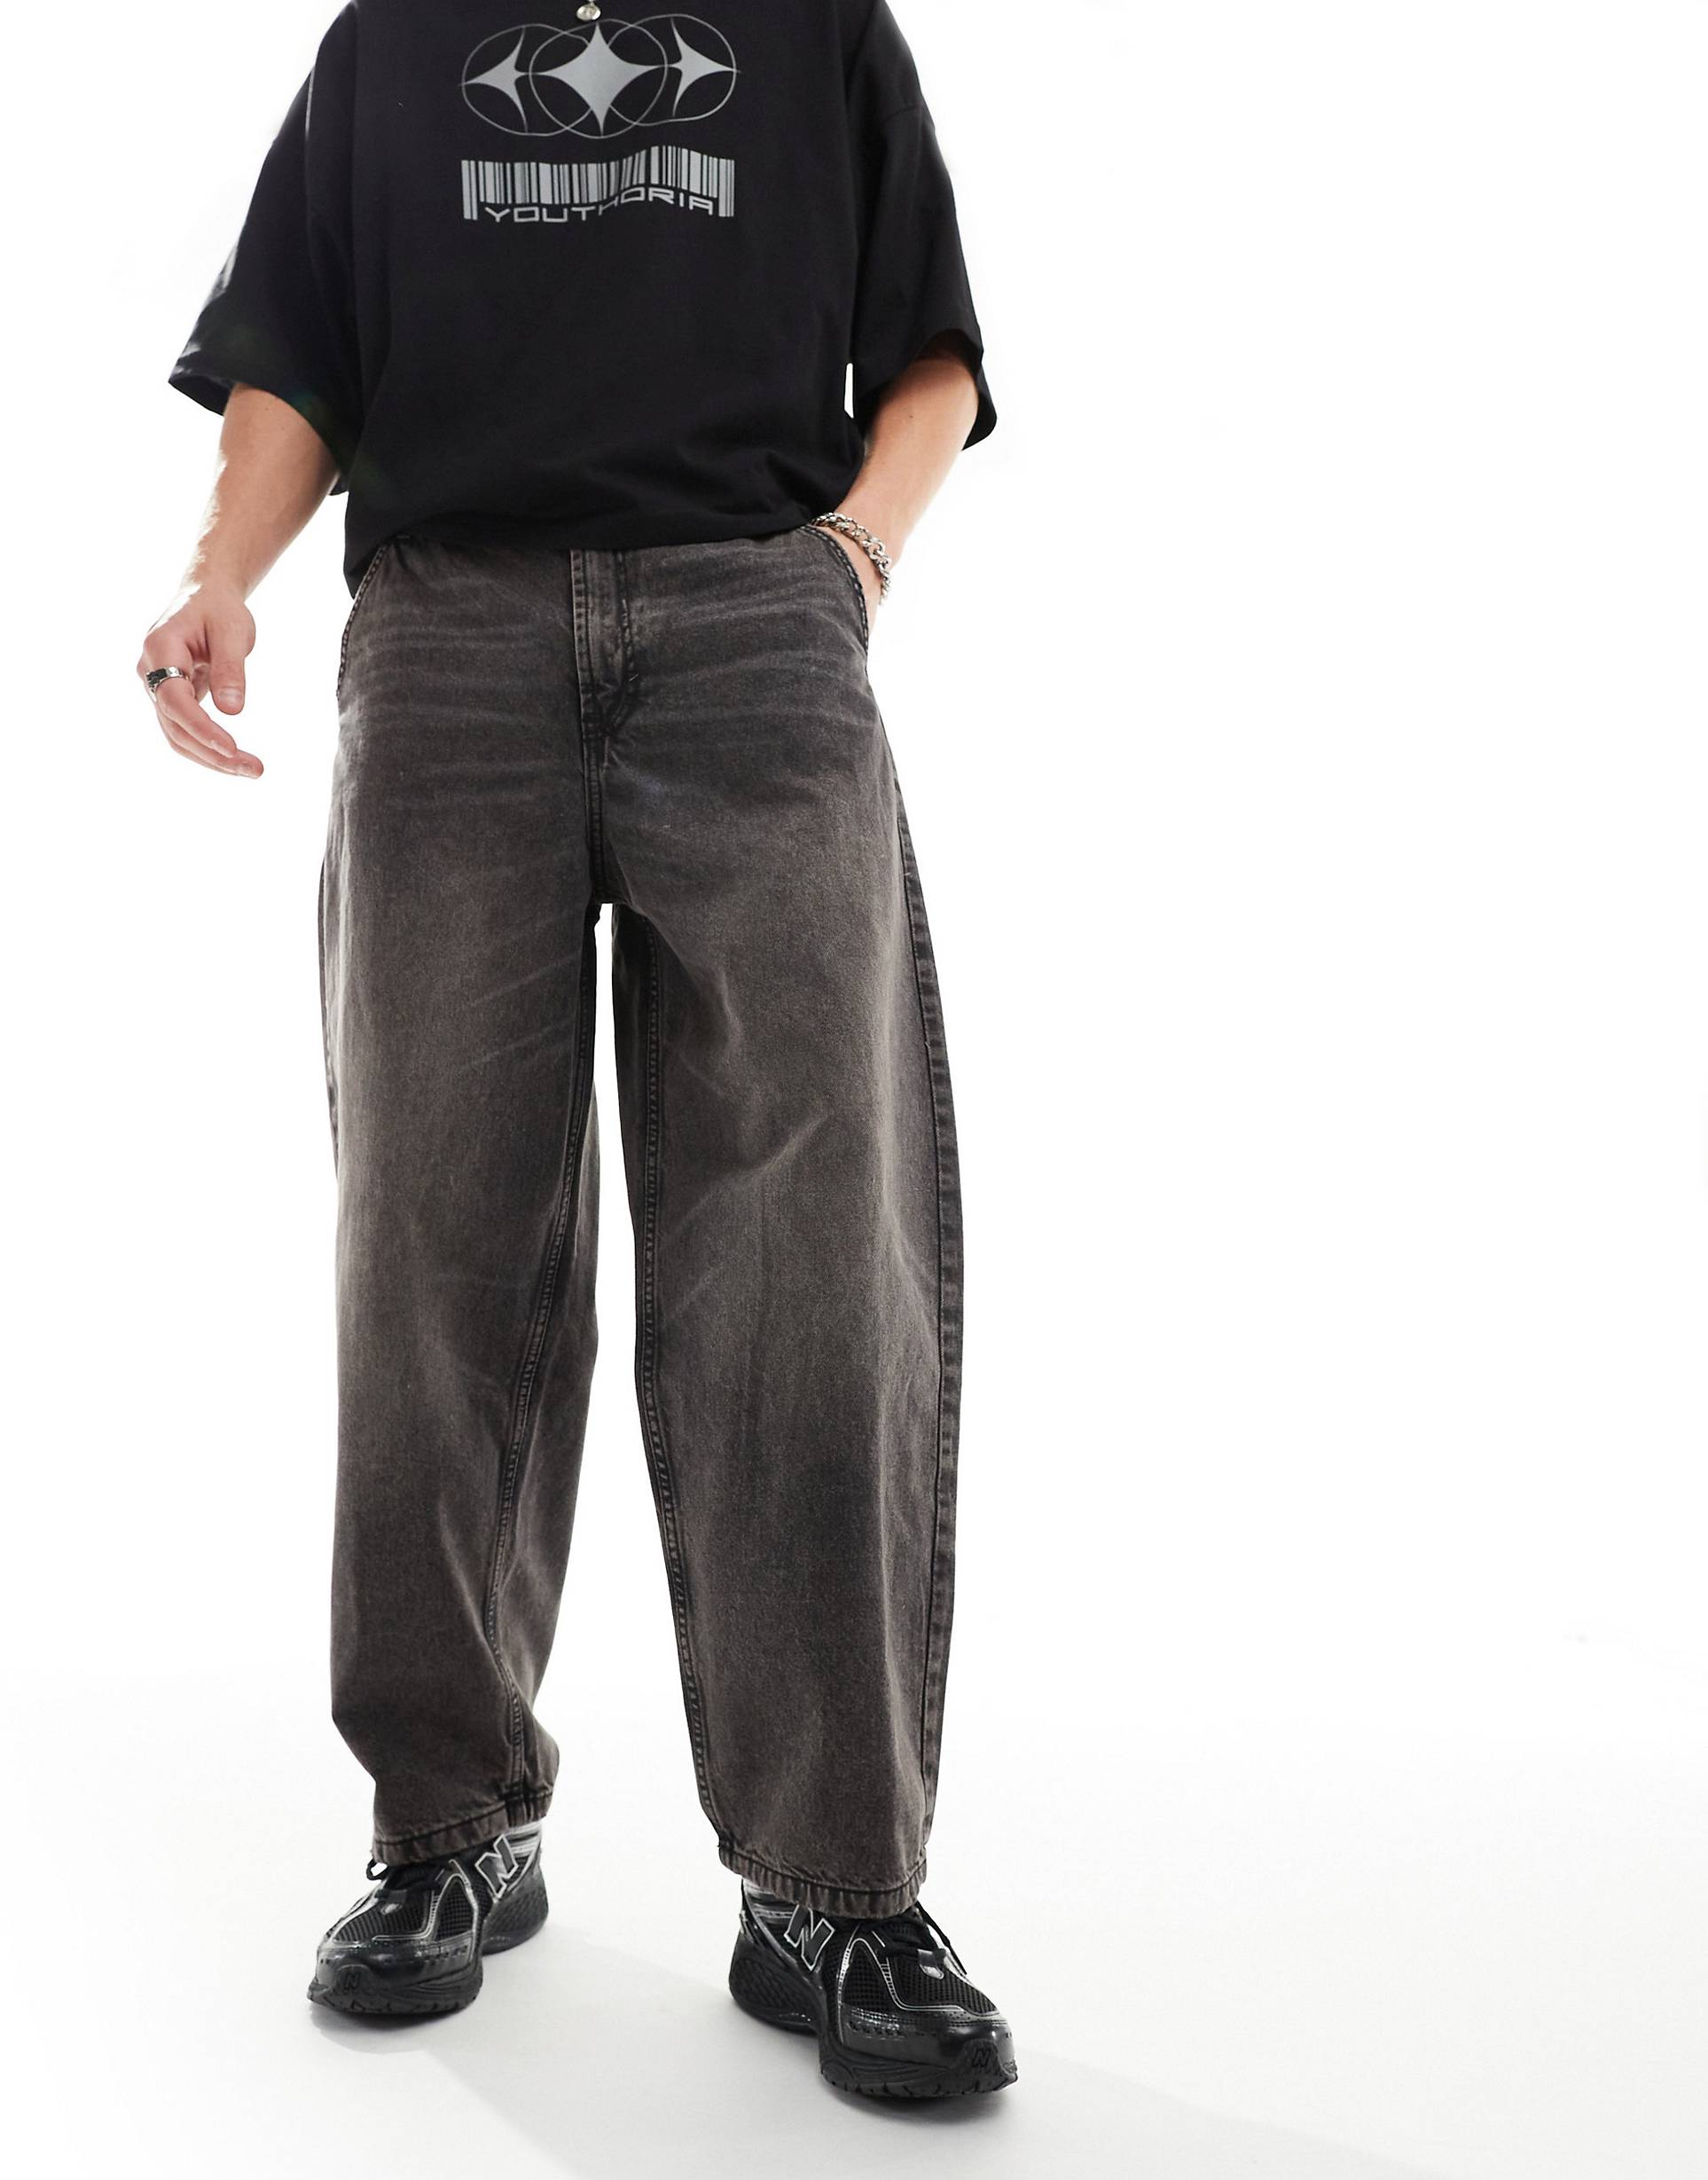 Джинсы Bershka Skater Fit Casted, коричневый джинсы bershka зауженные 42 размер